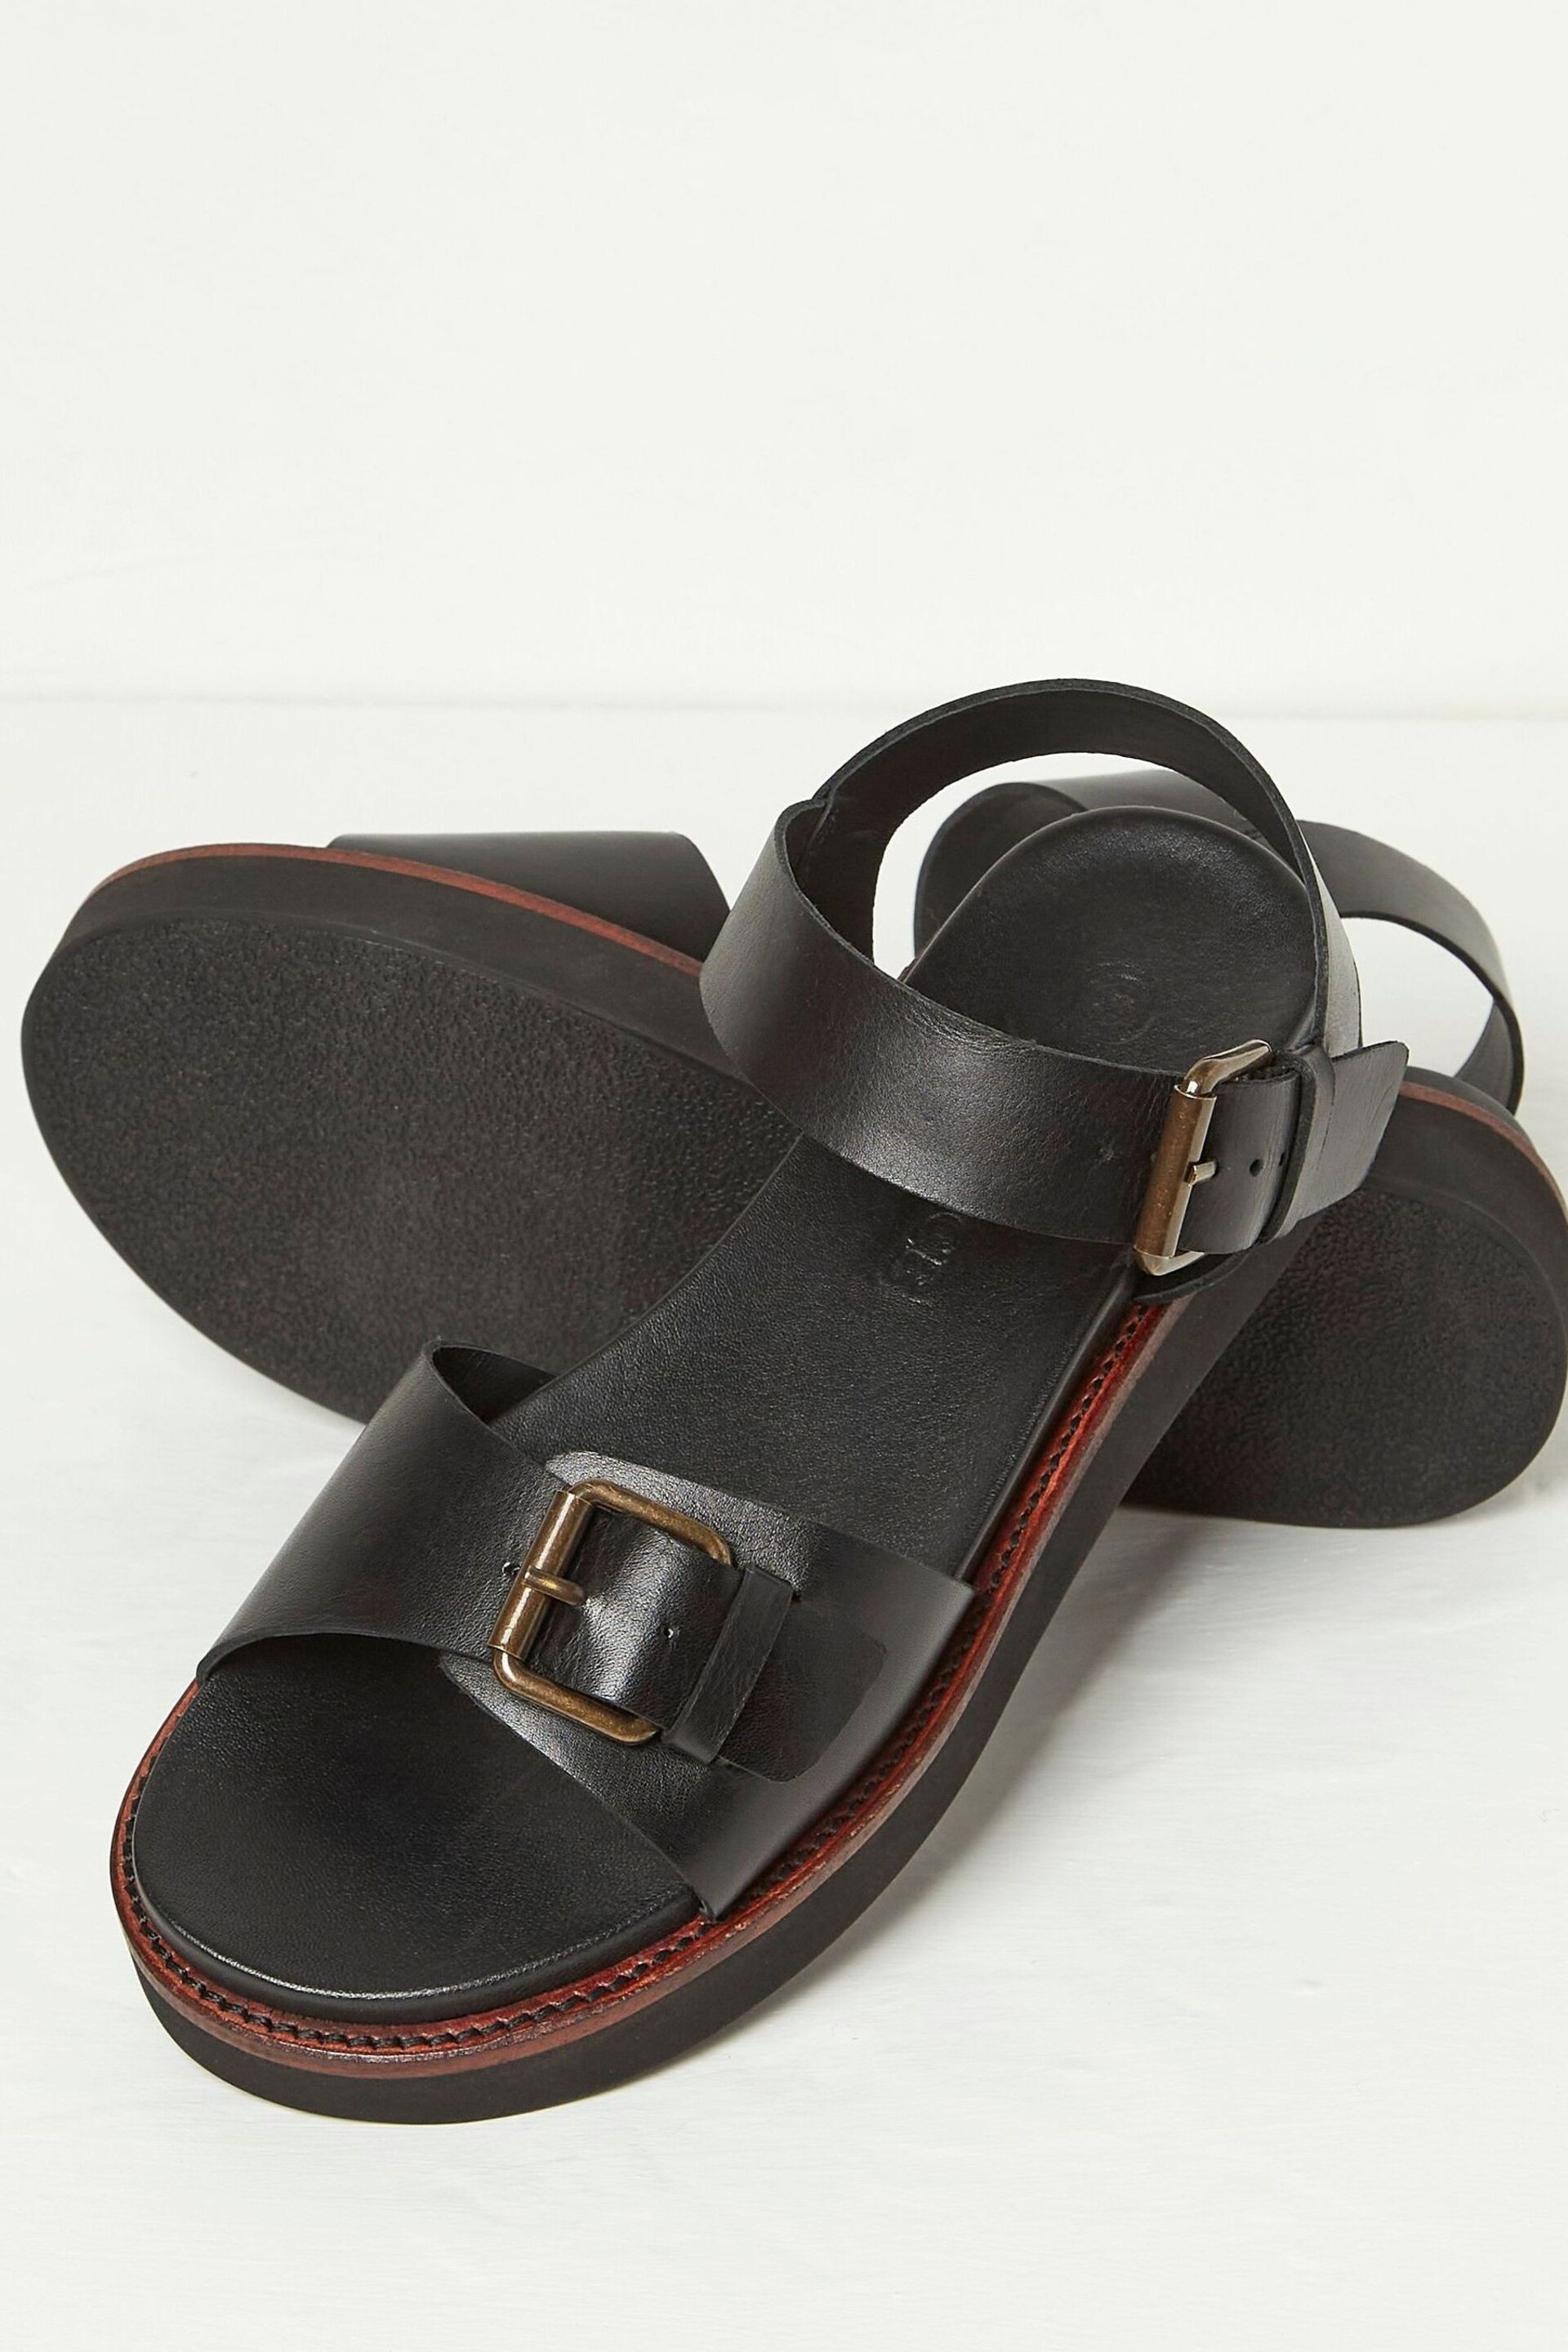 FatFace Black Ambie Flatform Buckle Sandals - Image 2 of 3